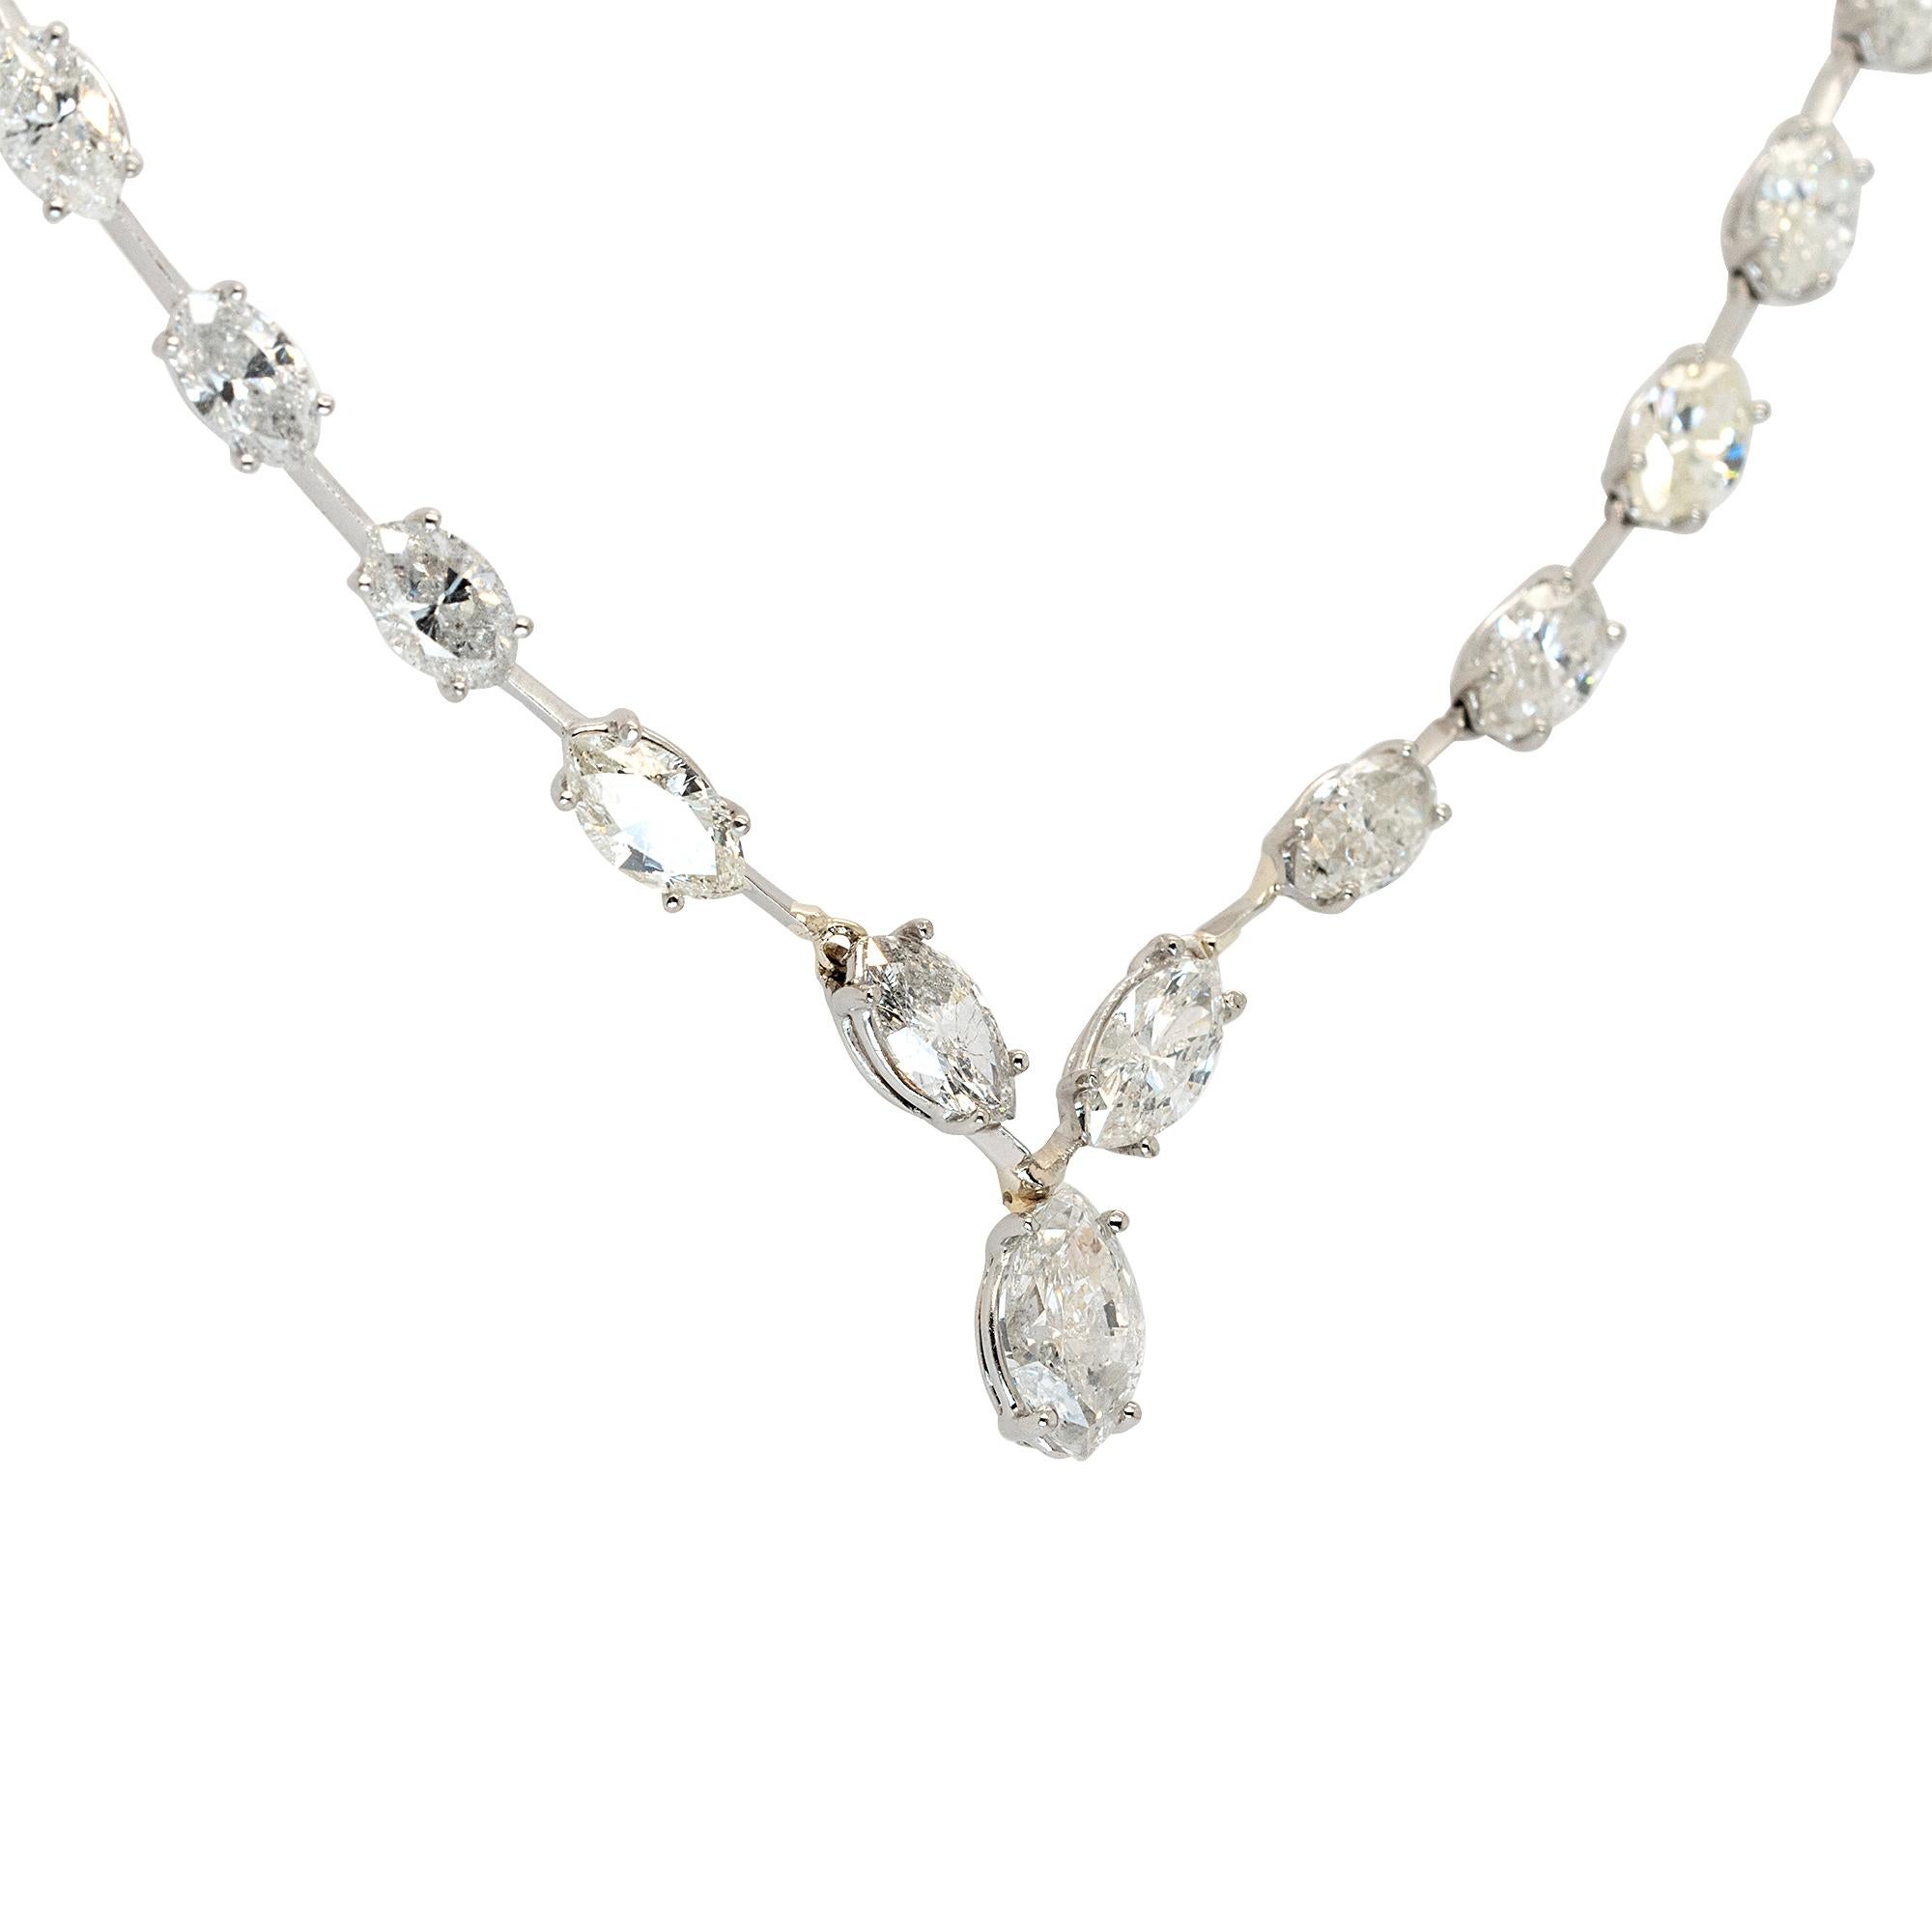 Material: Platinum
Diamond Details:
14.05ctw Marquise Cut Diamonds
Chain Size:	
16